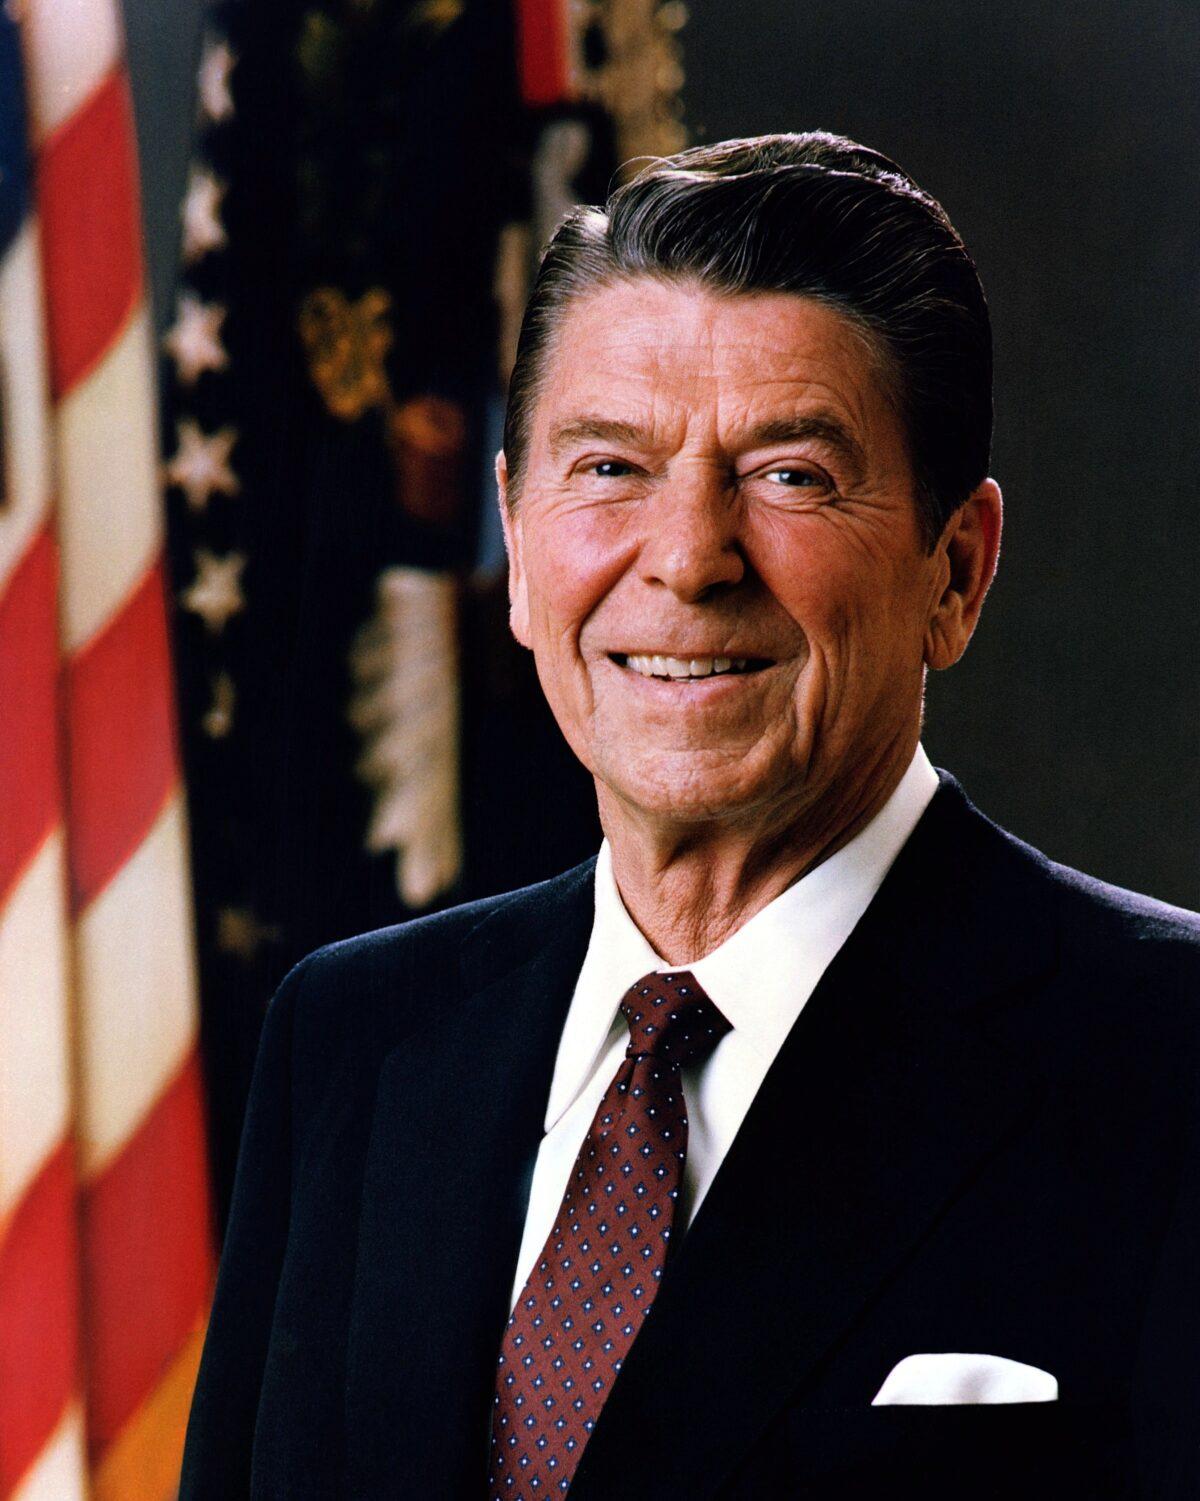 Official portrait of President Ronald Reagan in 1981. (Public Domain)